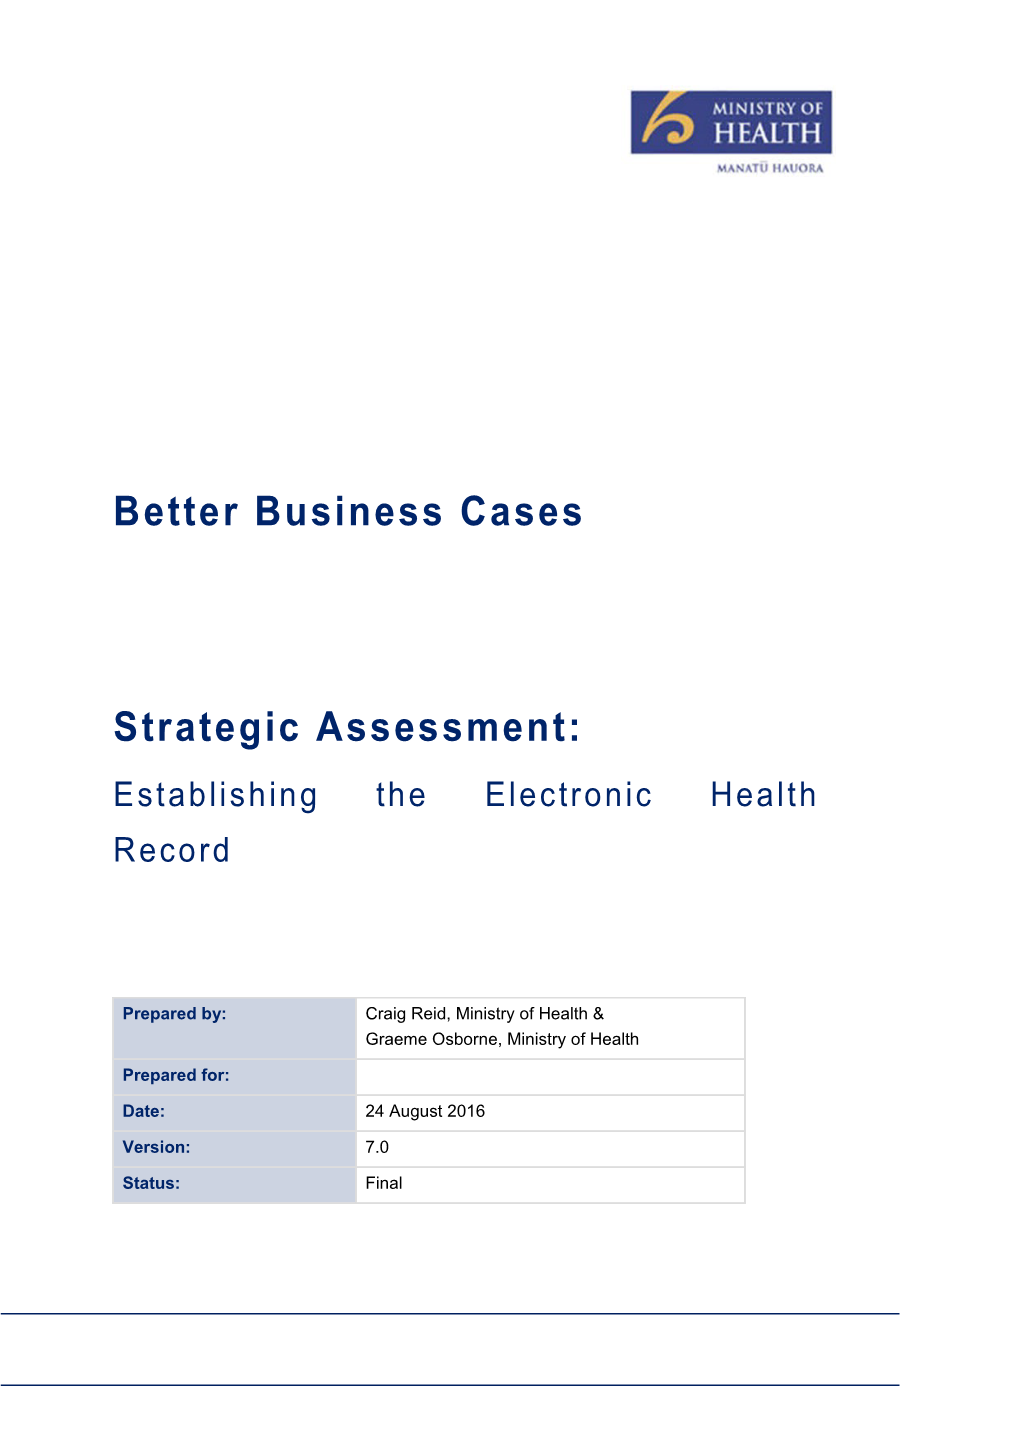 Strategic Assessment: Establishing the Electronic Health Record